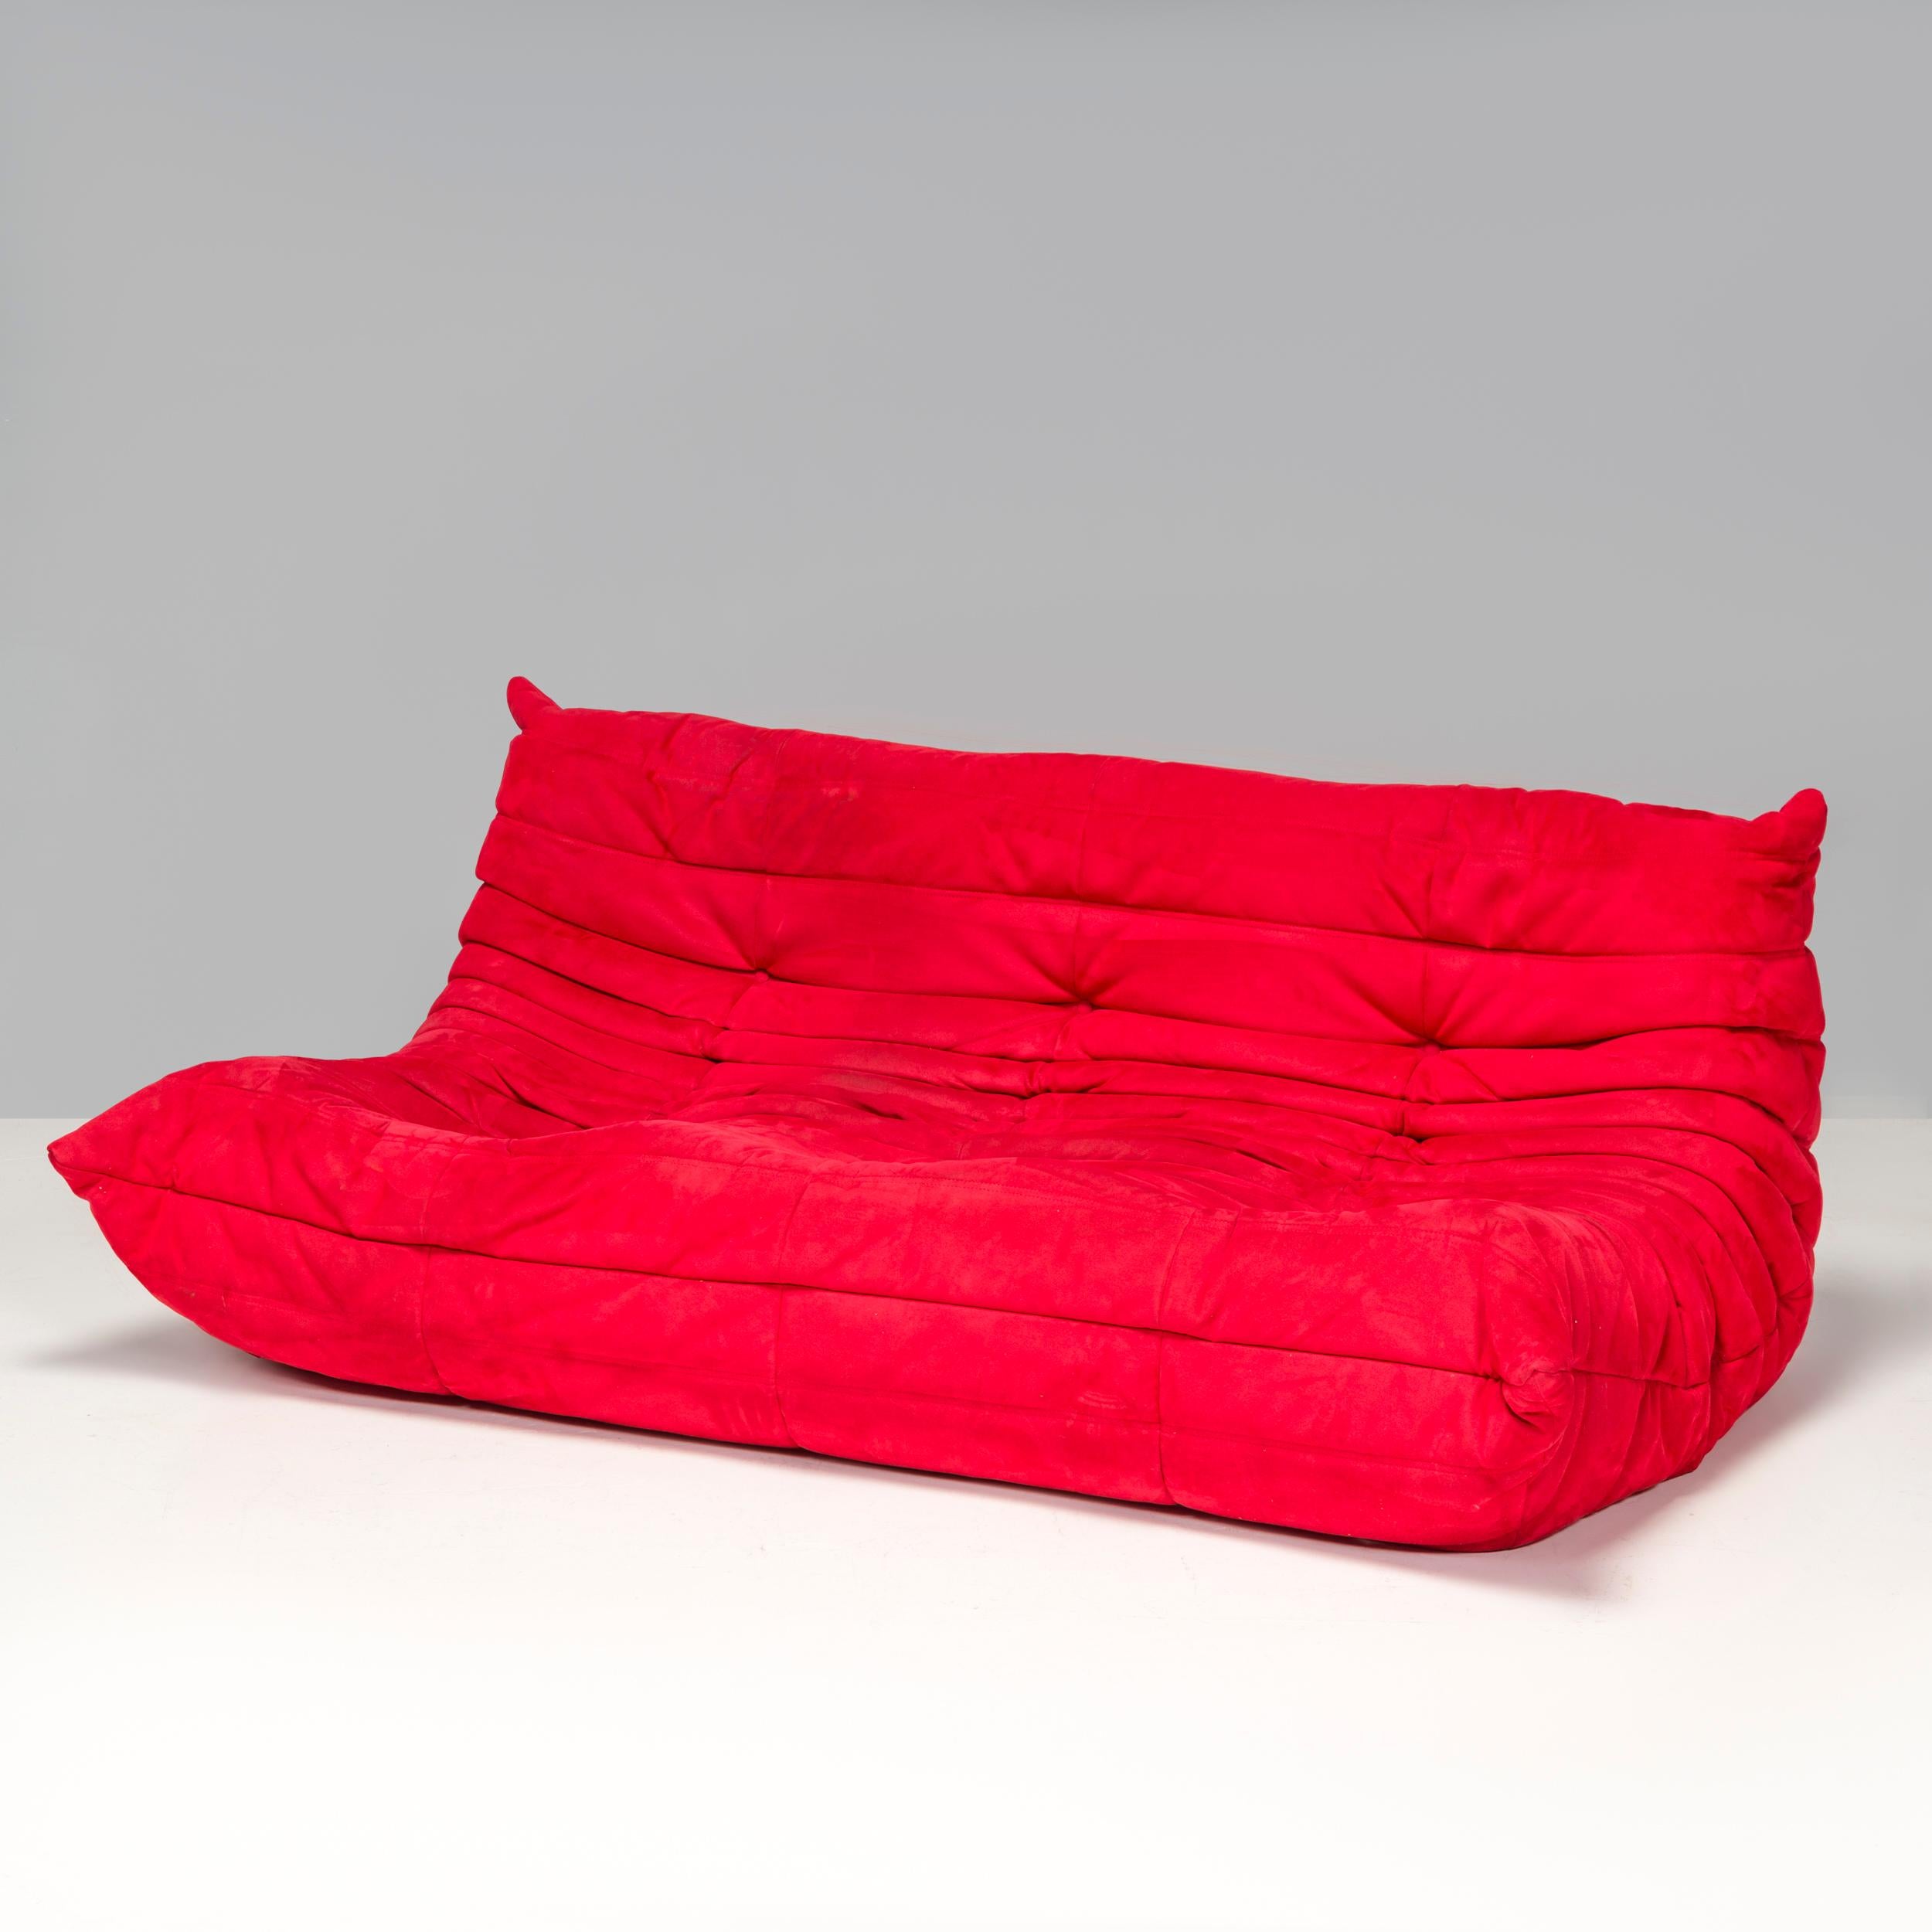 Fabric Ligne Roset by Michel Ducaroy Togo Red Alcantara Sectional Sofa, Set of 3